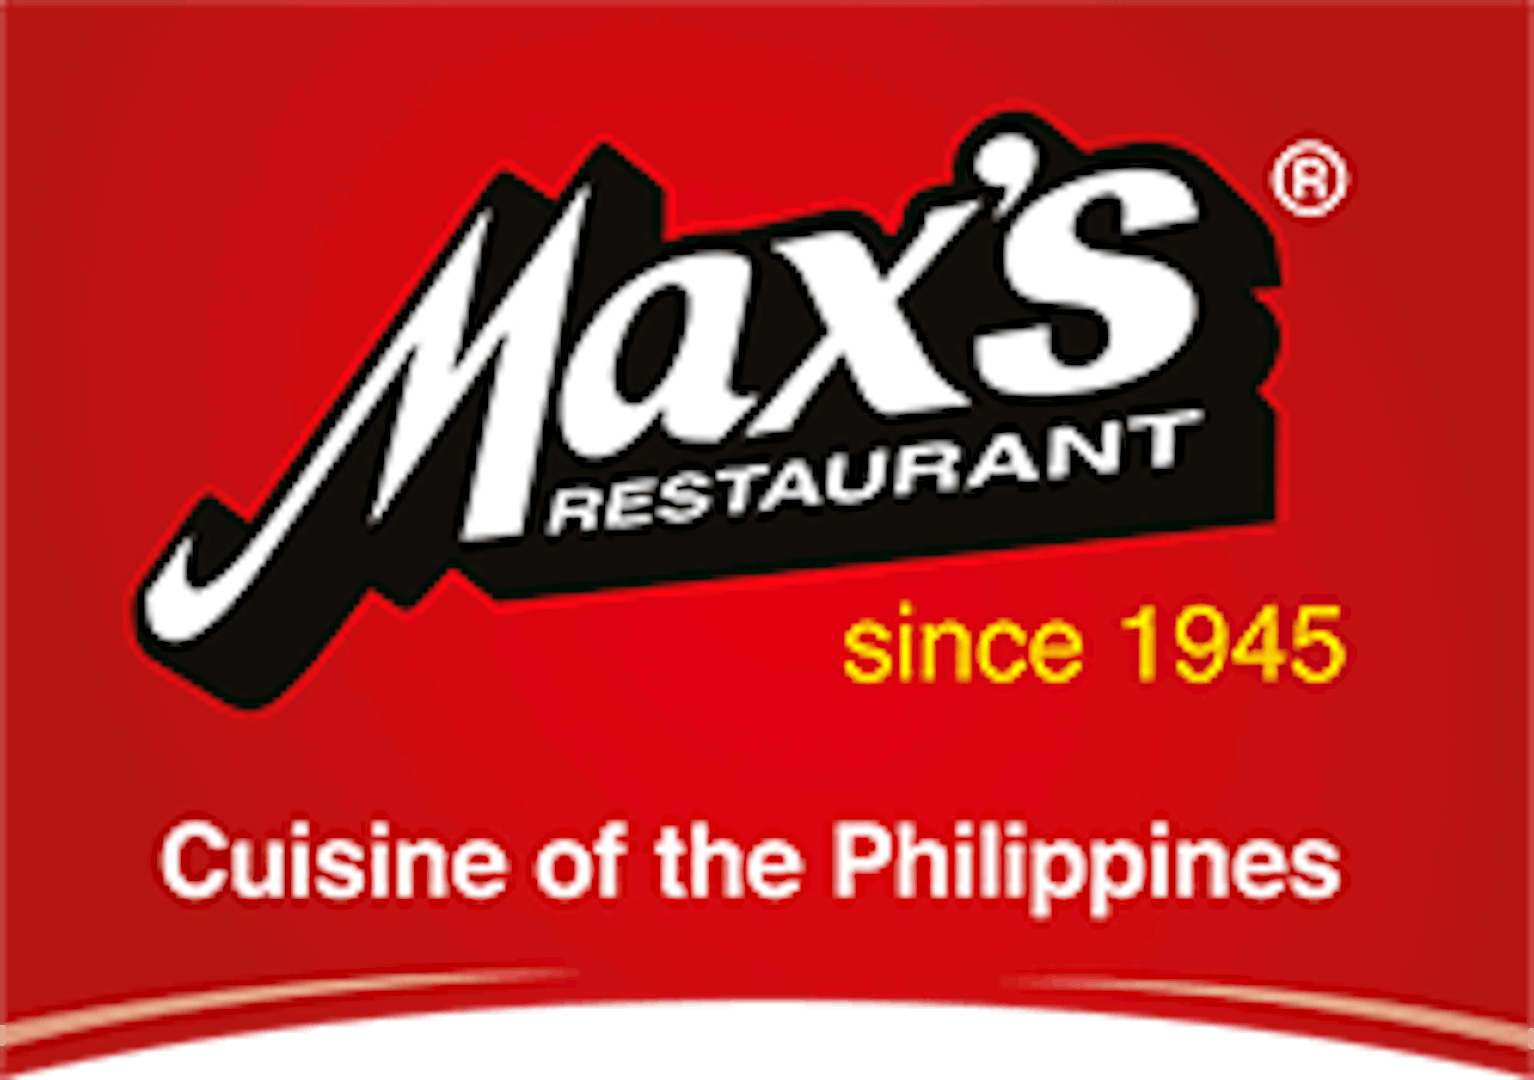 www.maxswaipahu.com